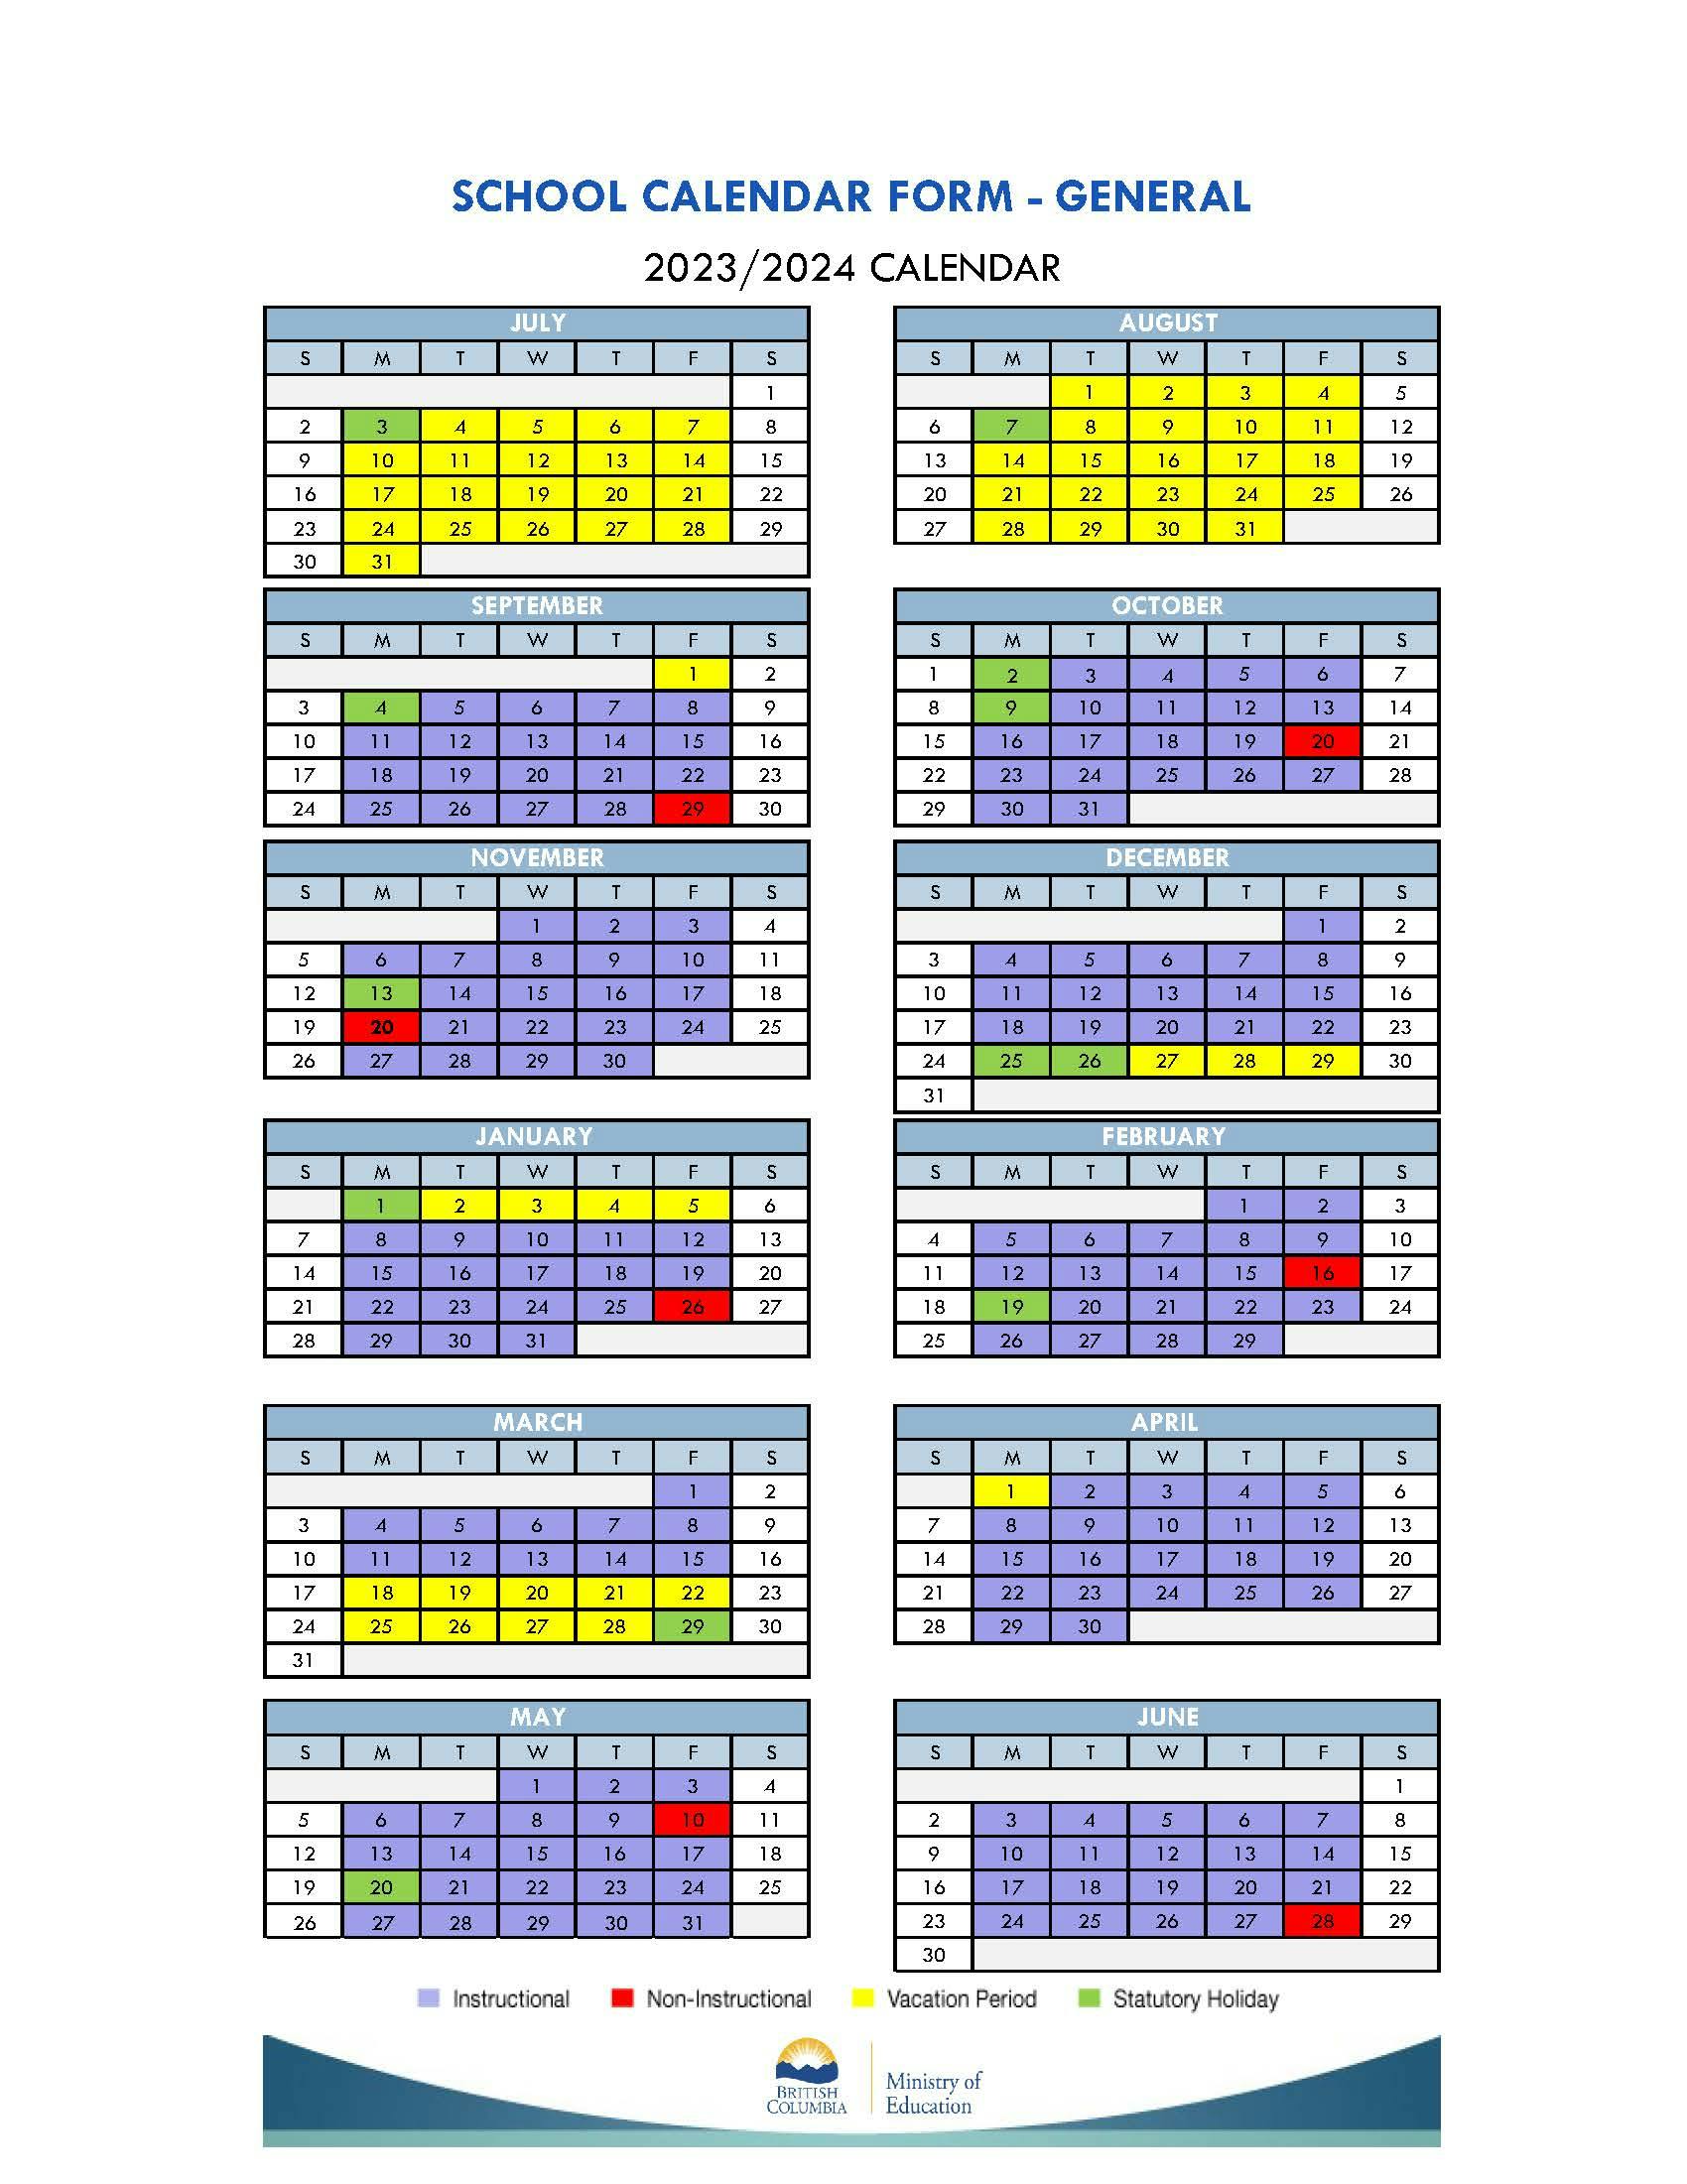 Draft 2023-24 School Calendar.jpg